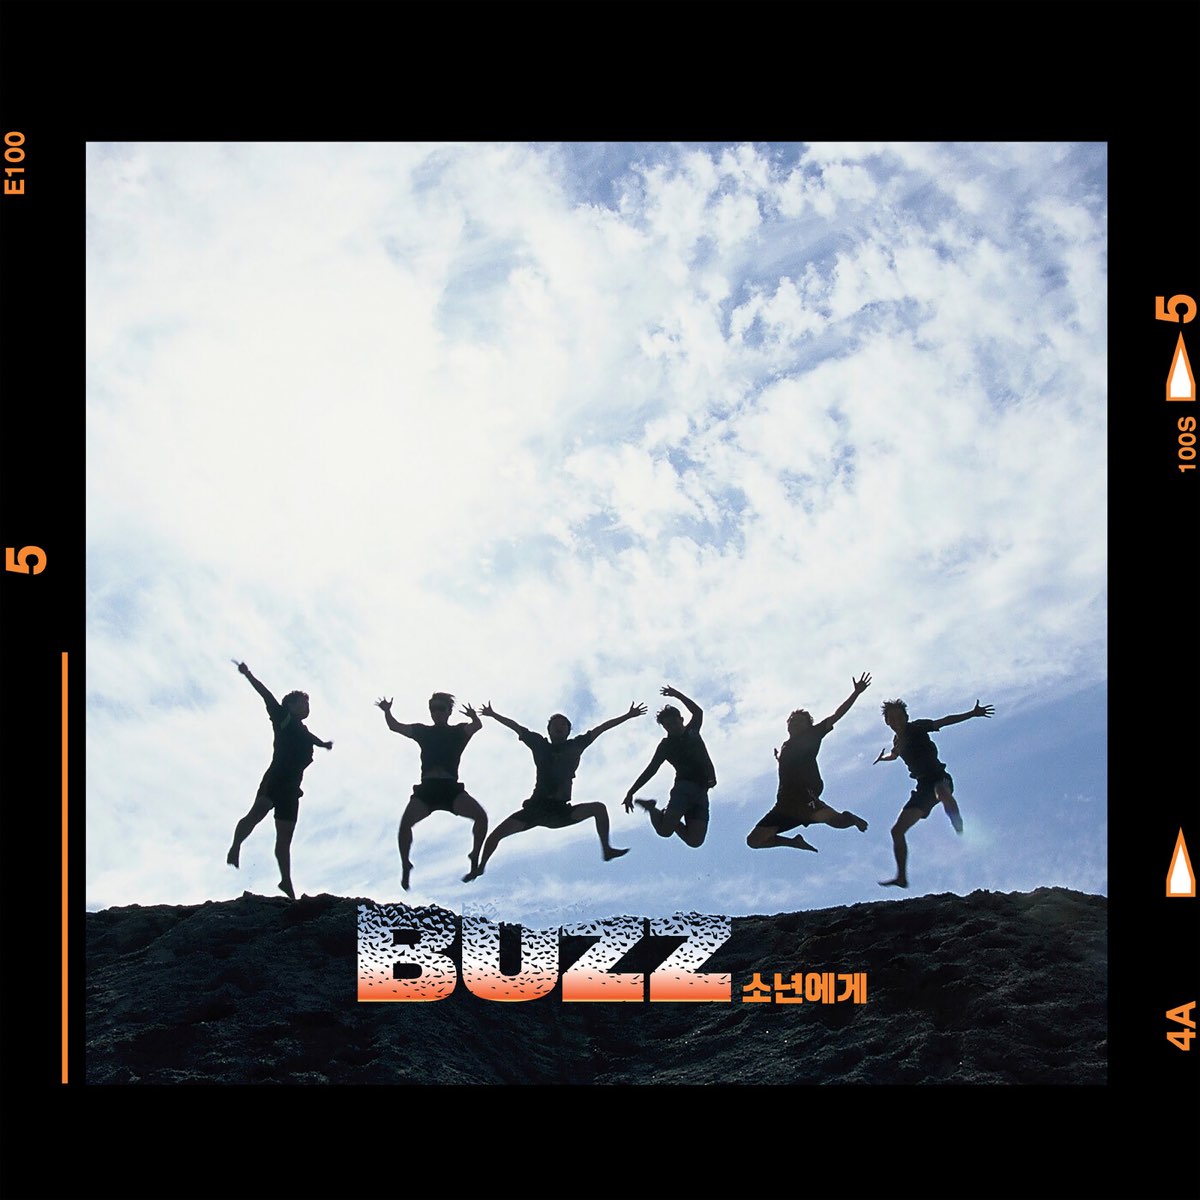 Dreaming single. Buzzkill песня. Песни Базз. Buzz album. Hold on Buzz Low картинки.